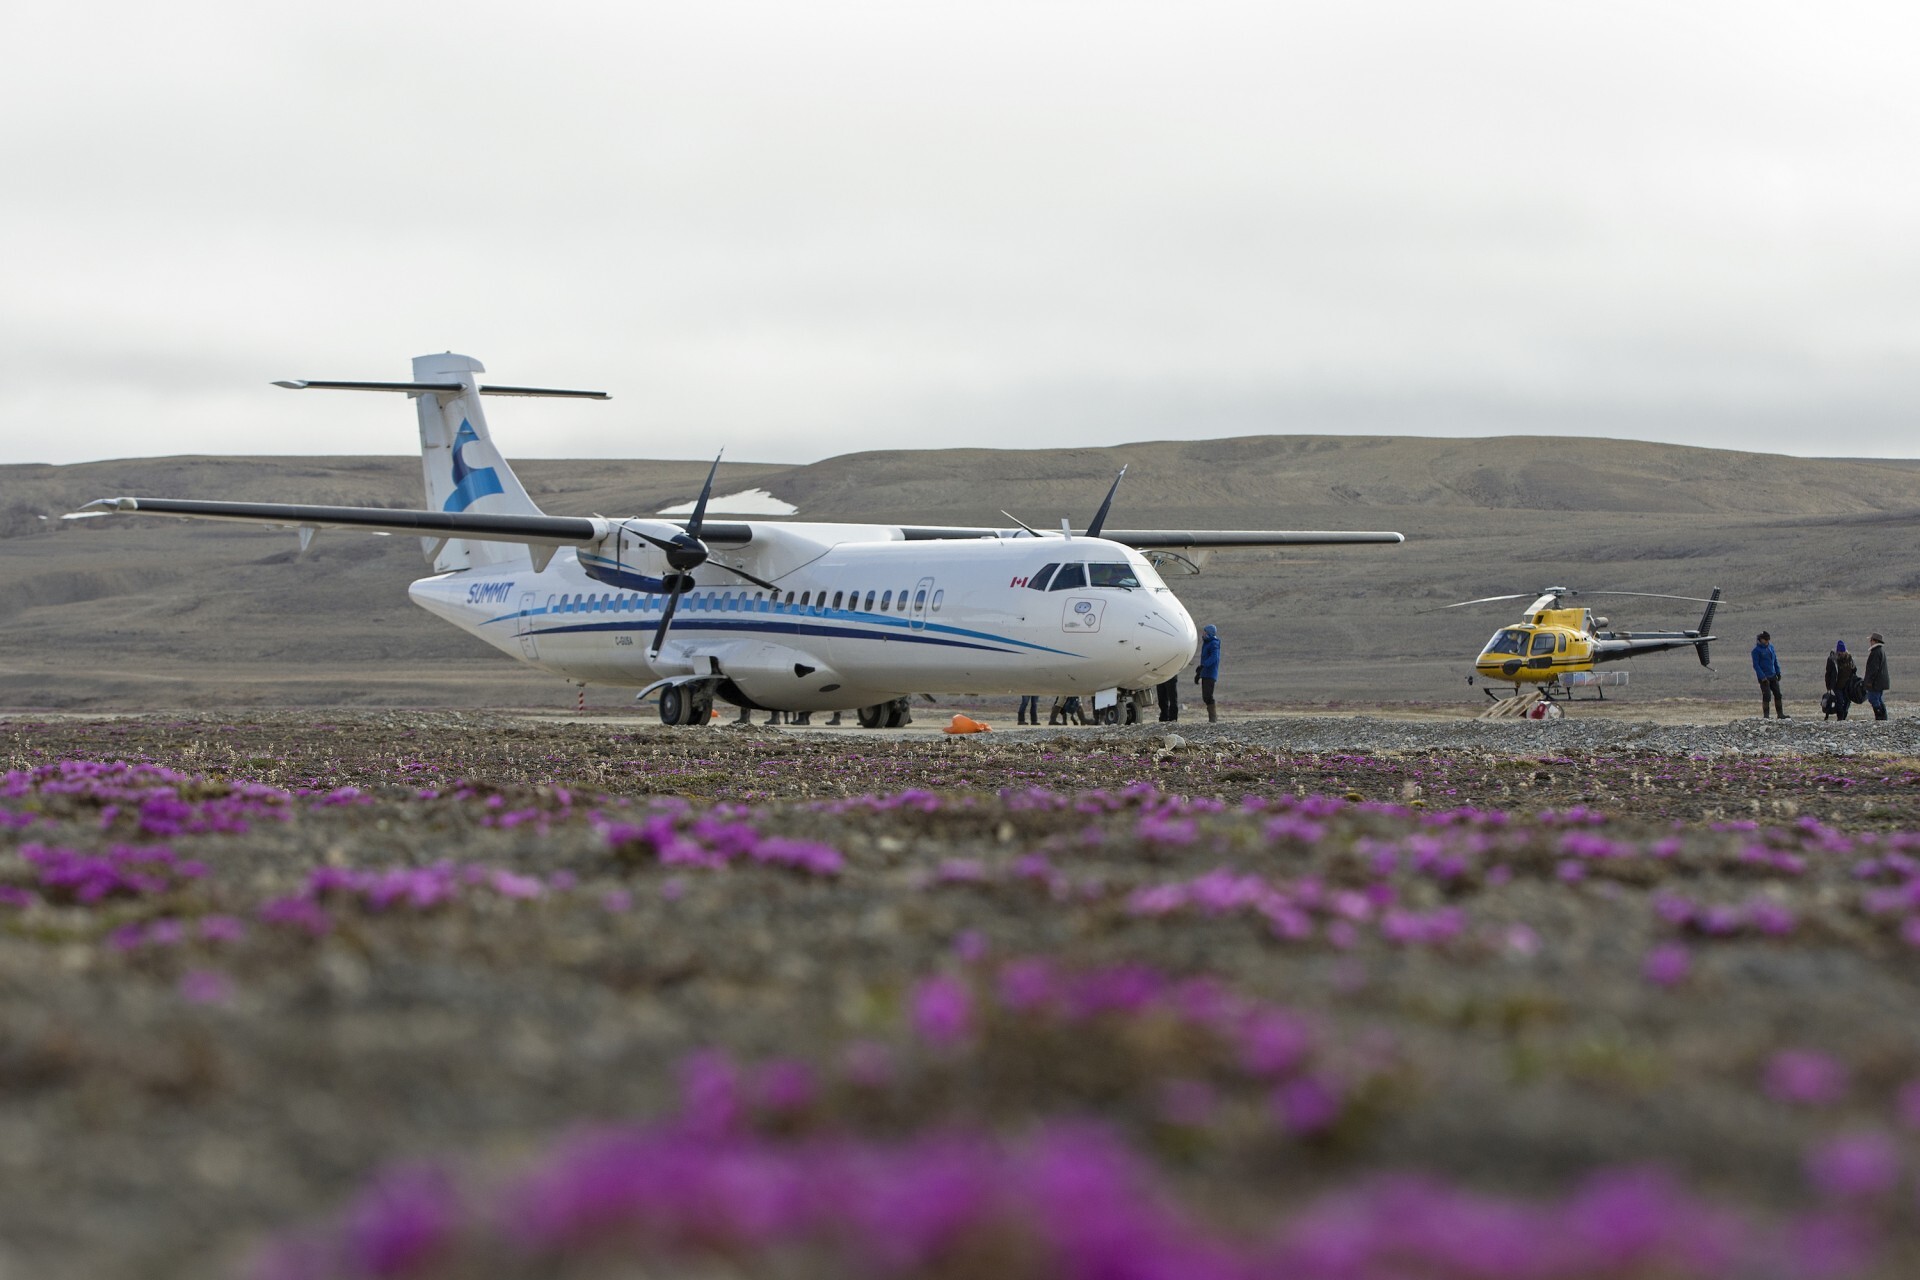 ATR Landing At Arctic Watch's Airstrip